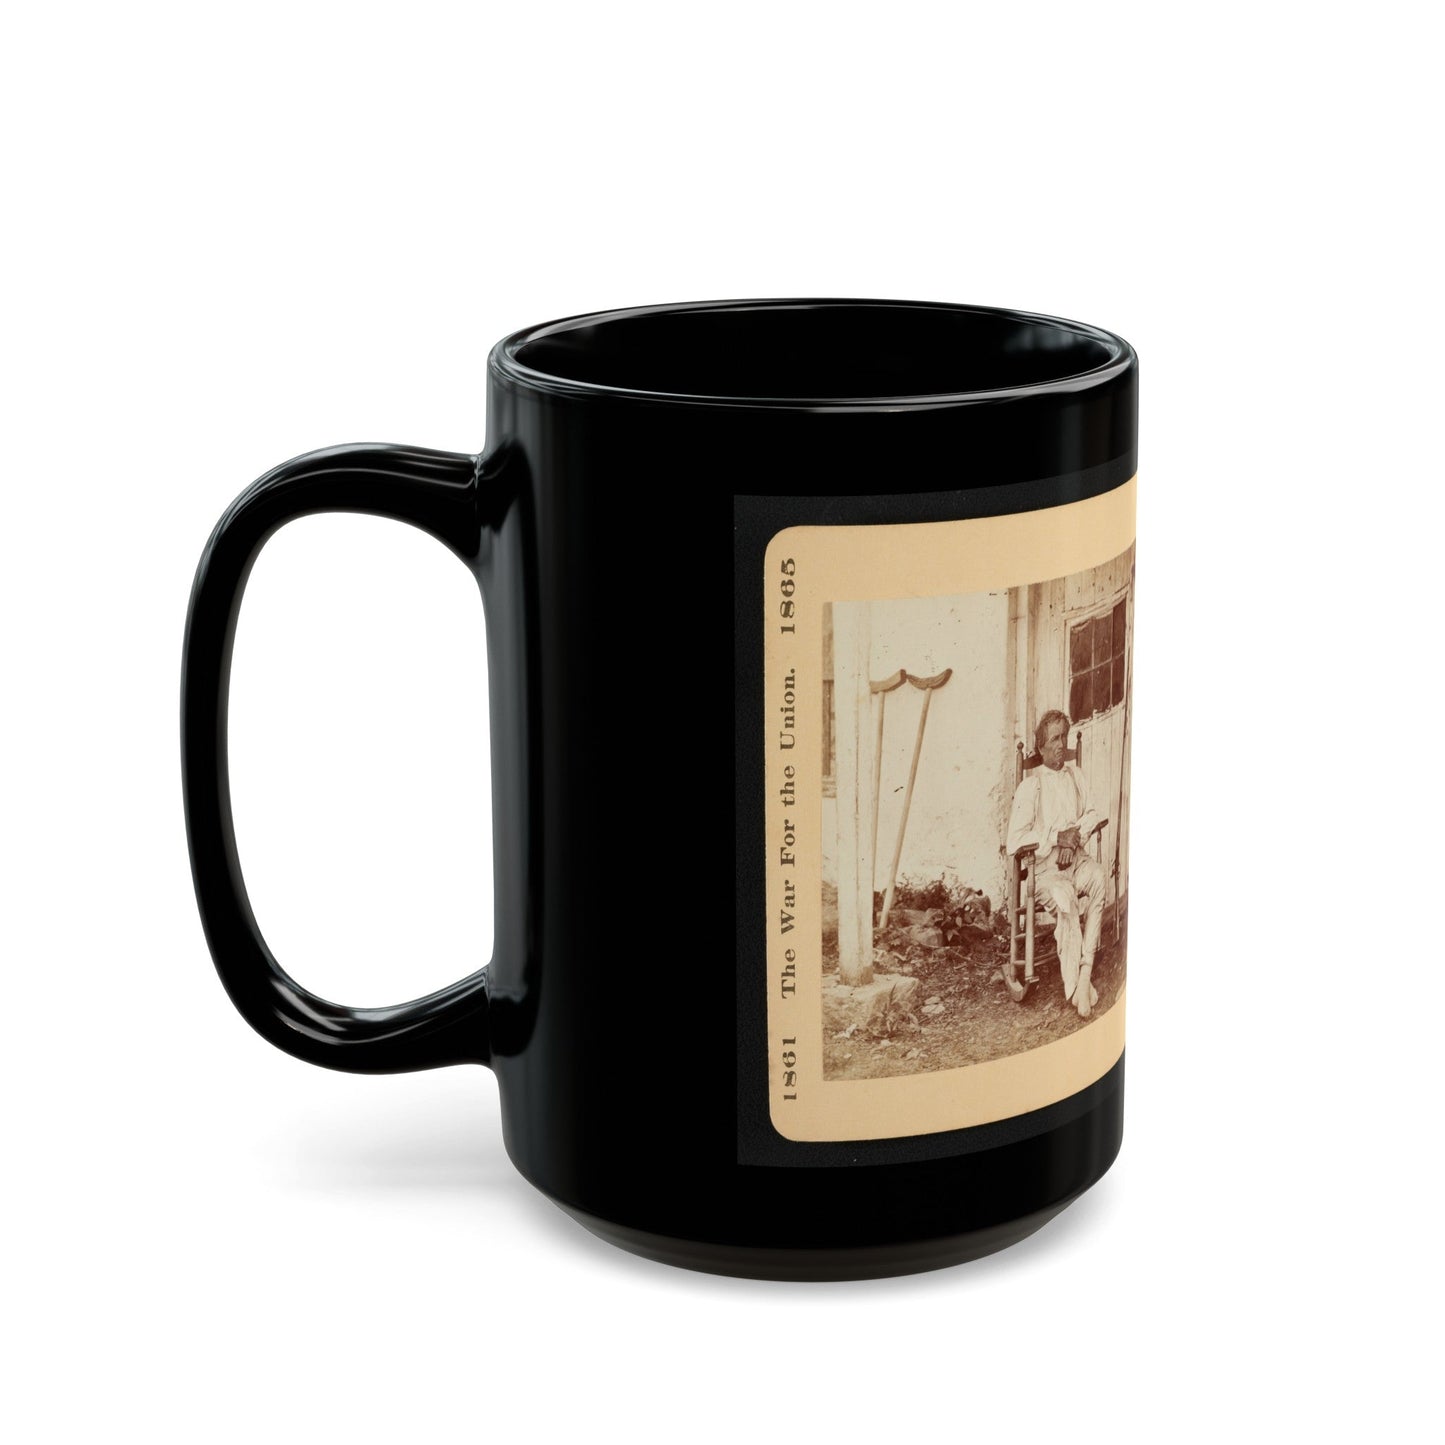 The Hero Of Gettysburg (U.S. Civil War) Black Coffee Mug